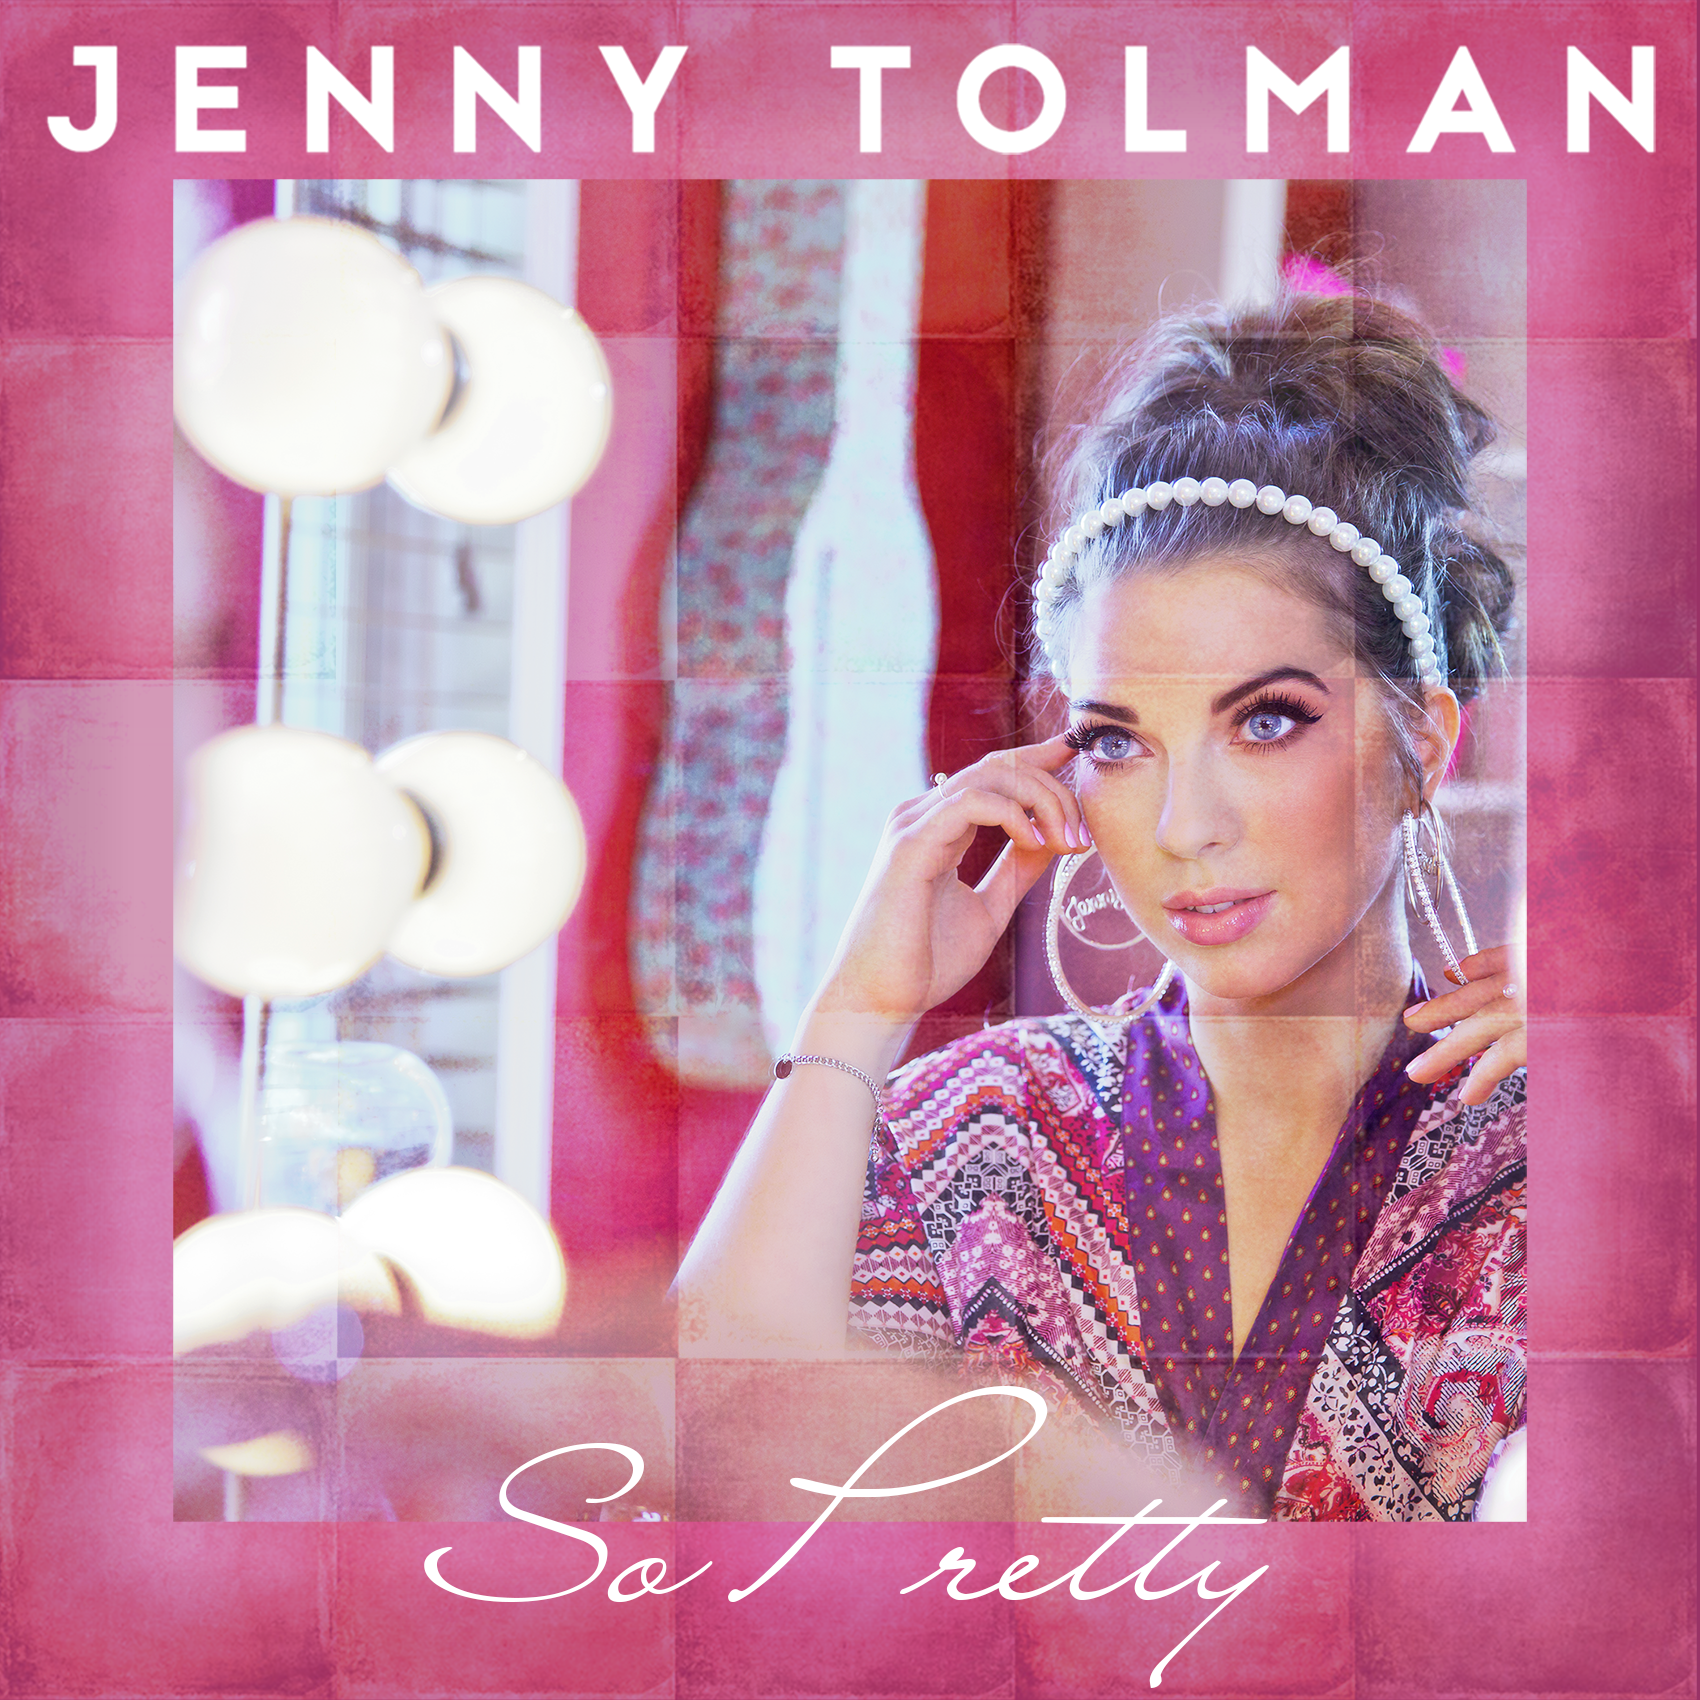 Jenny Tolman "So Pretty"